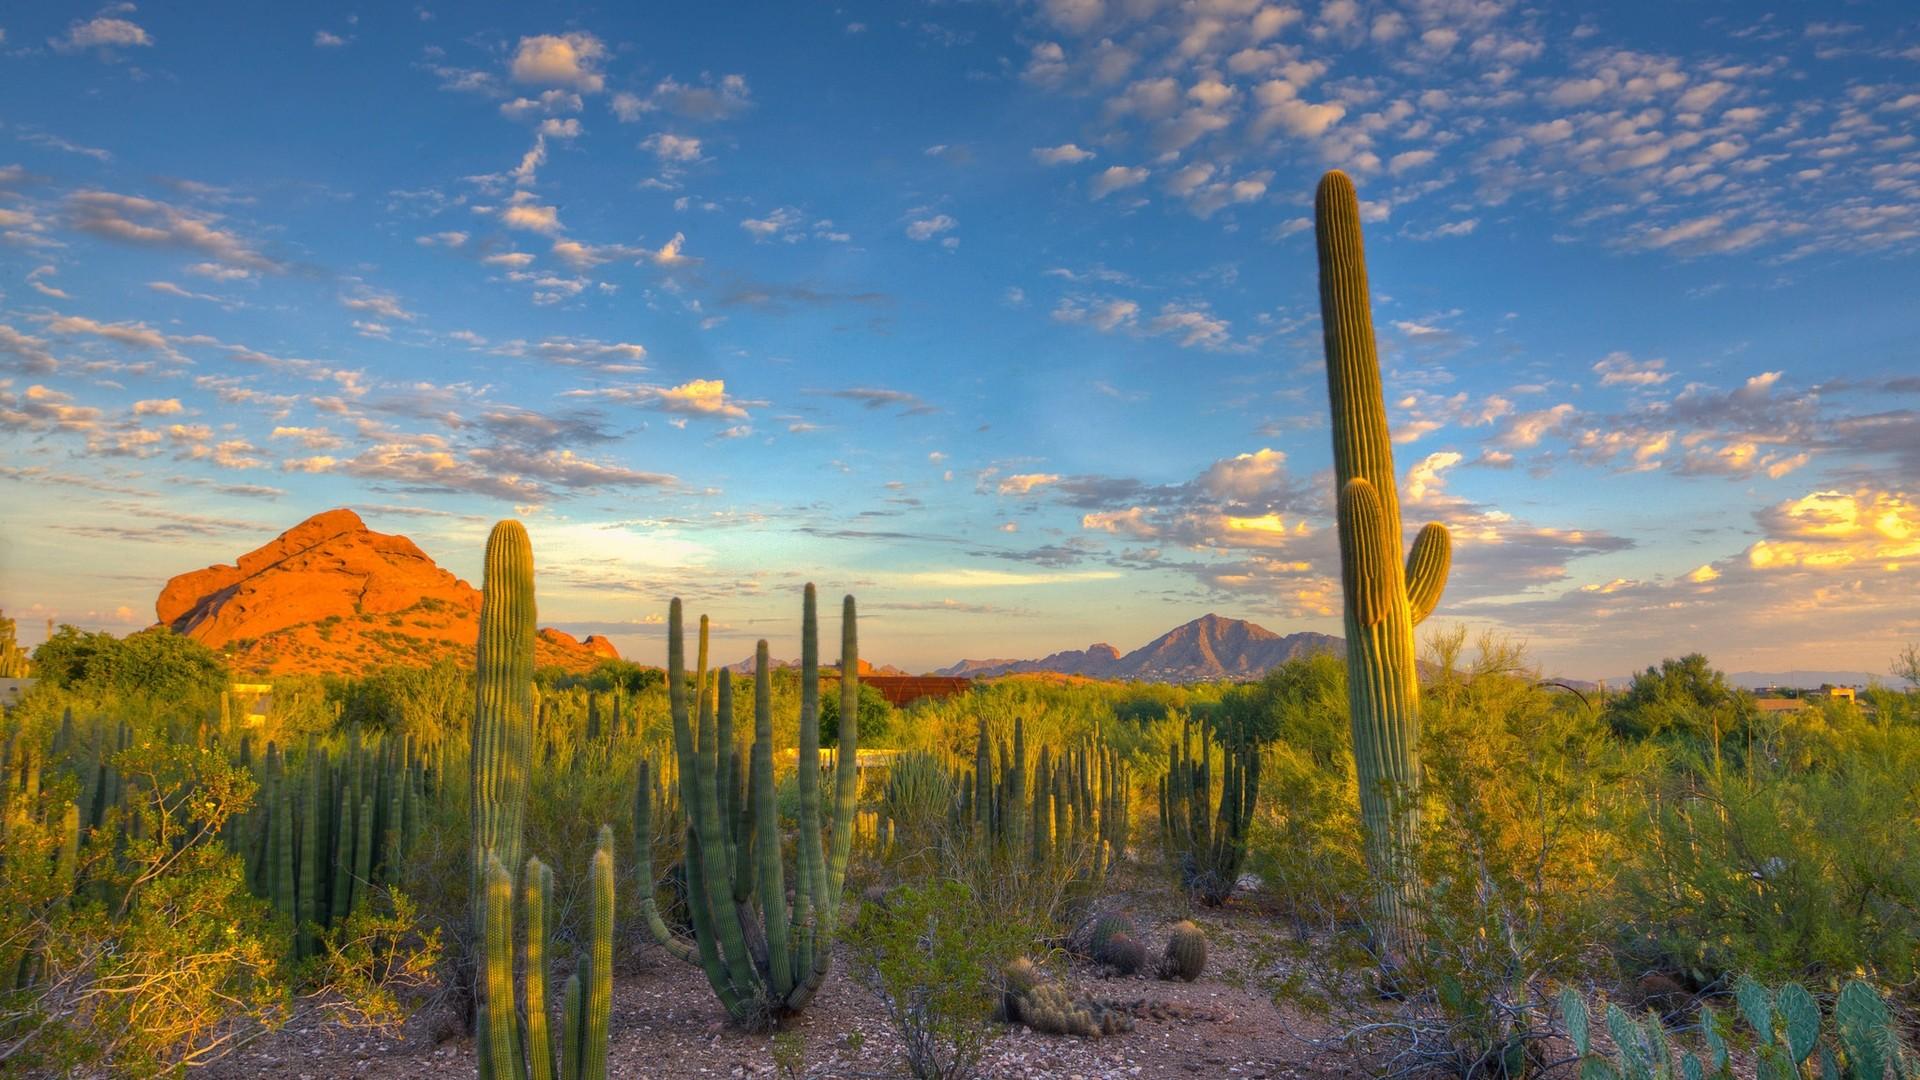 Nature mountain arizona desert landscape cacti - High resolution